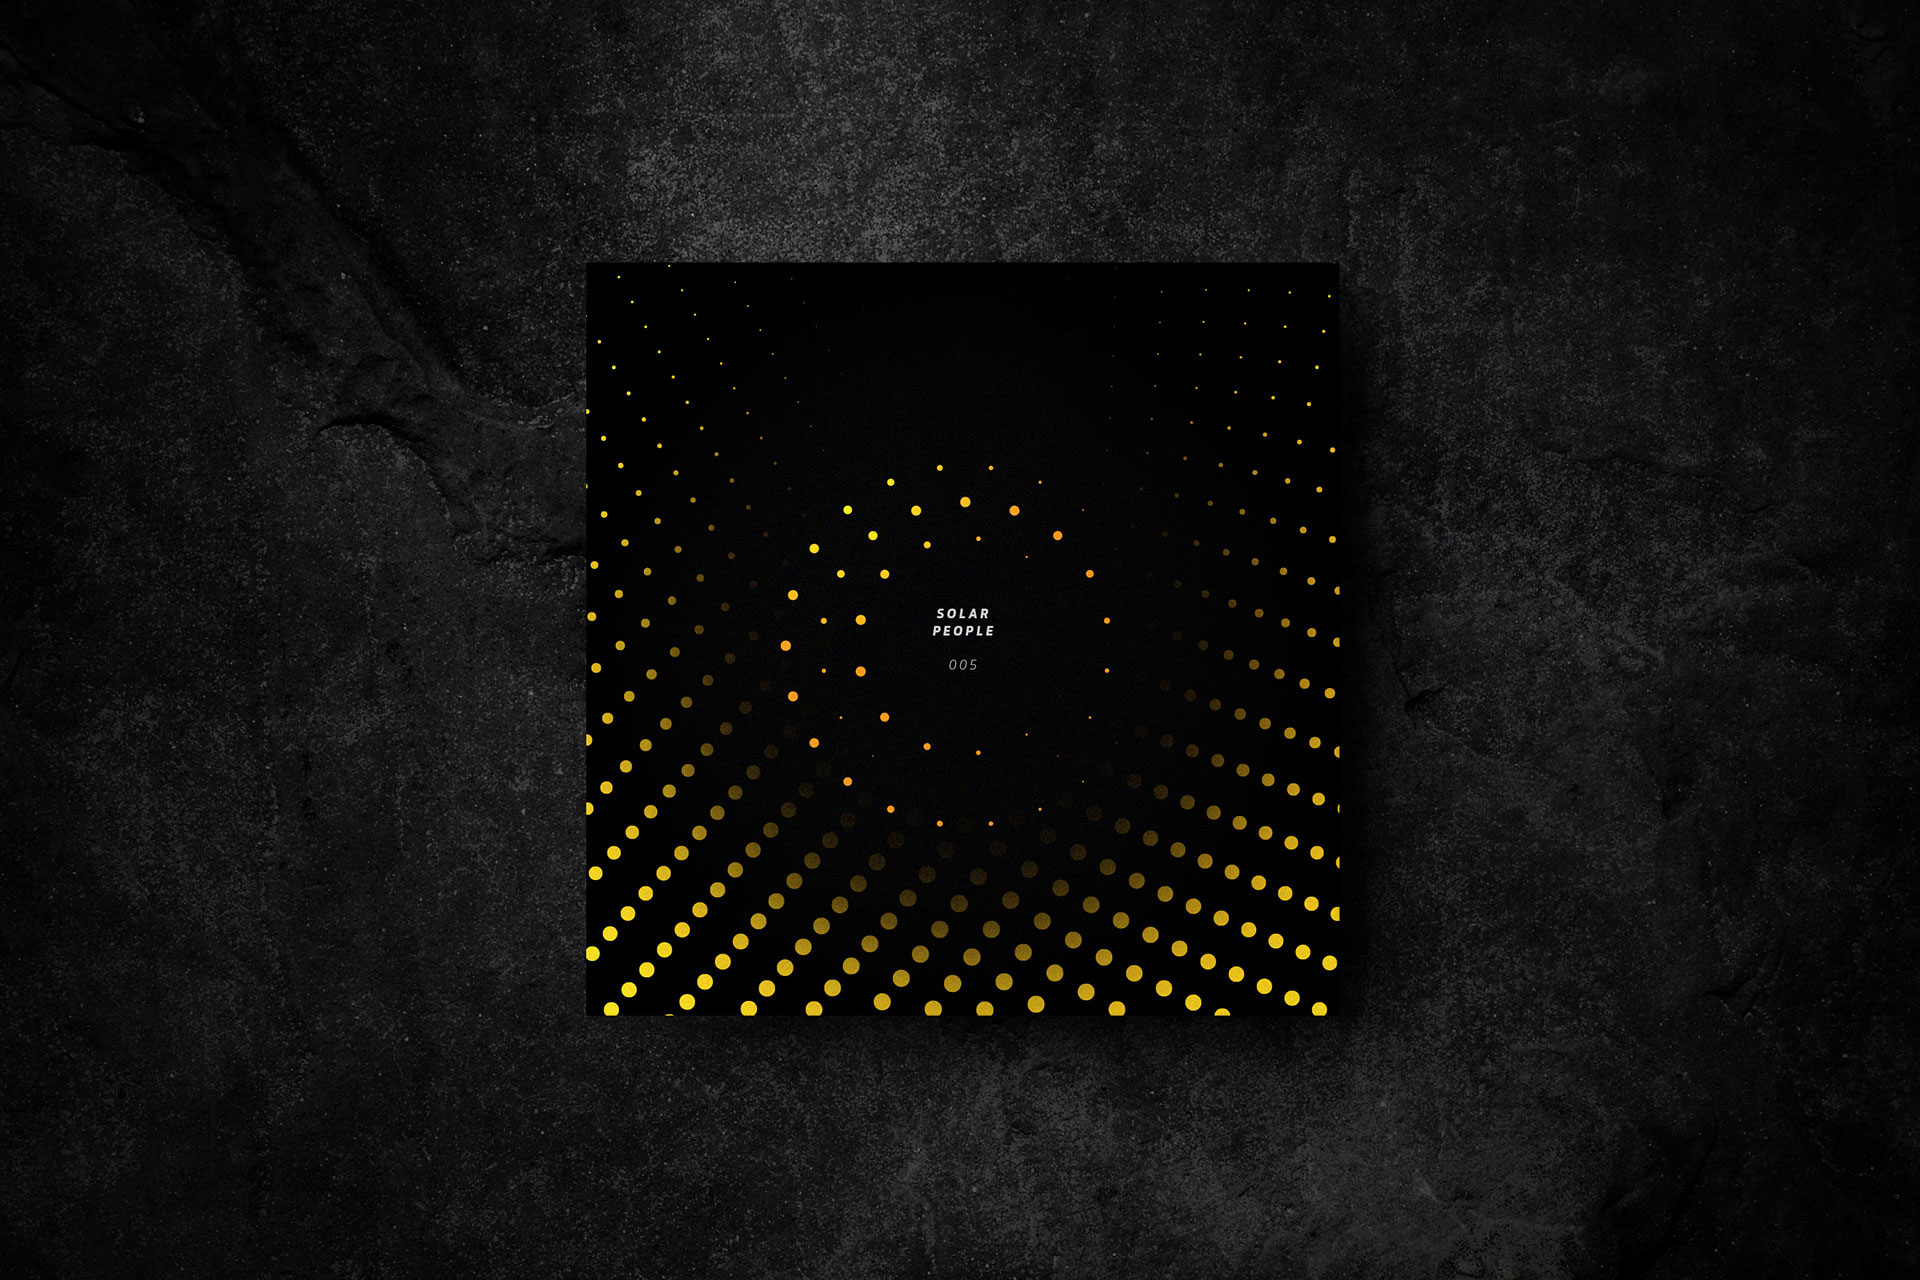 Solar People Vinyl cover design